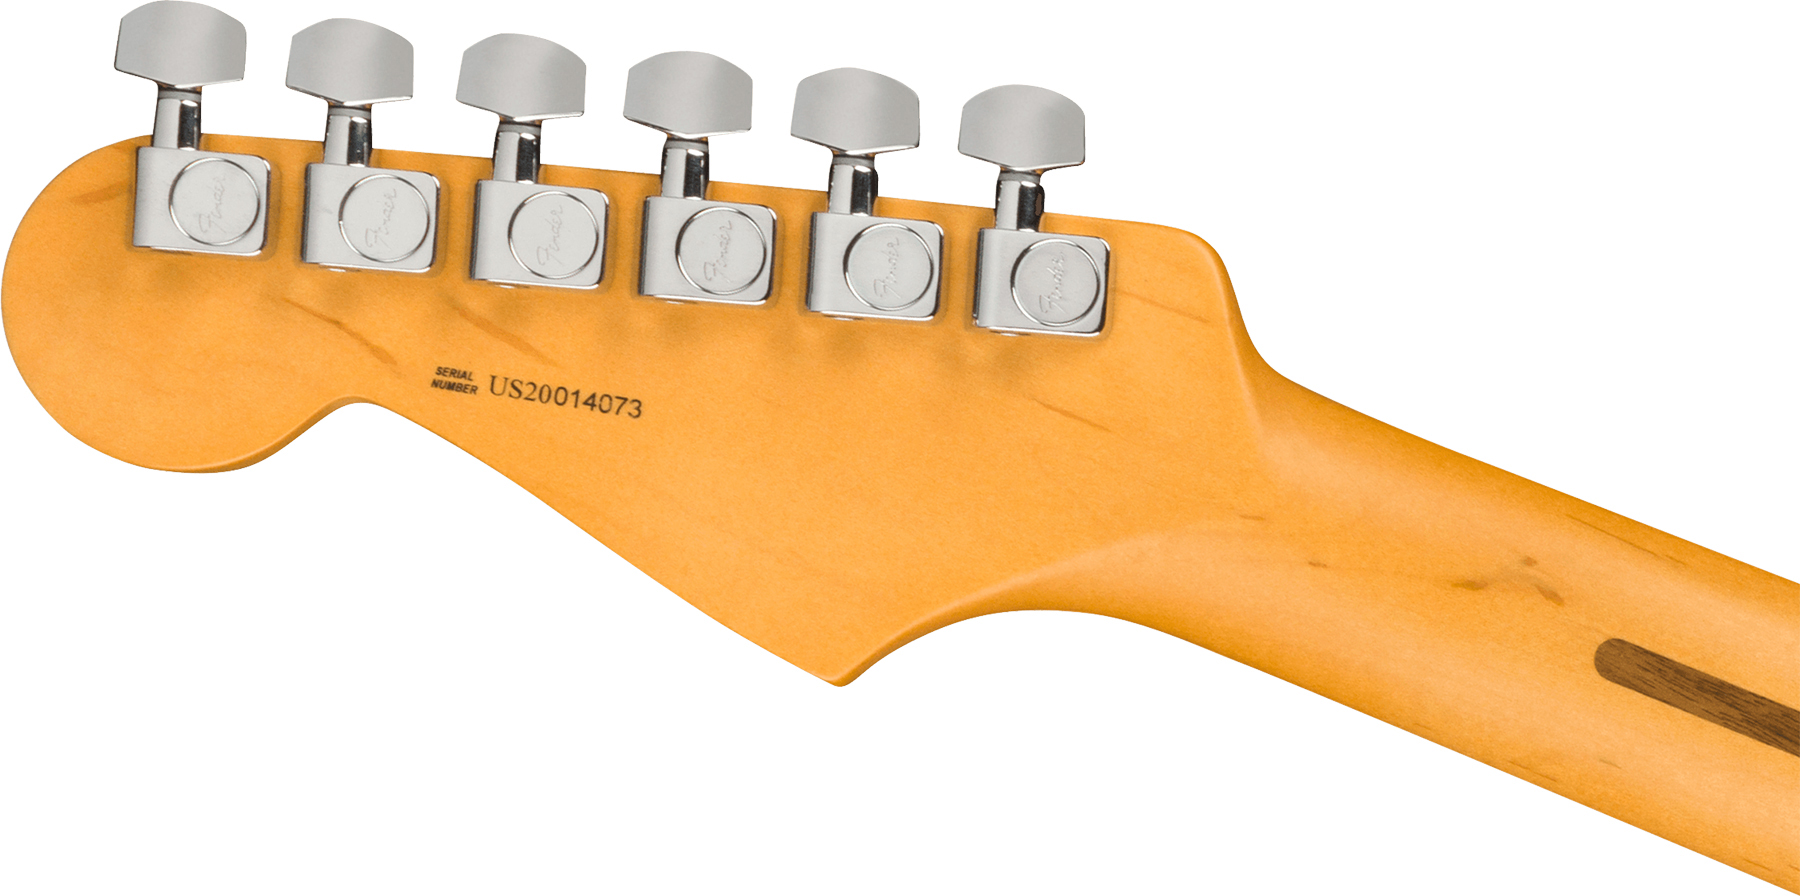 Fender Strat American Professional Ii Hss Usa Mn - Roasted Pine - Str shape electric guitar - Variation 2